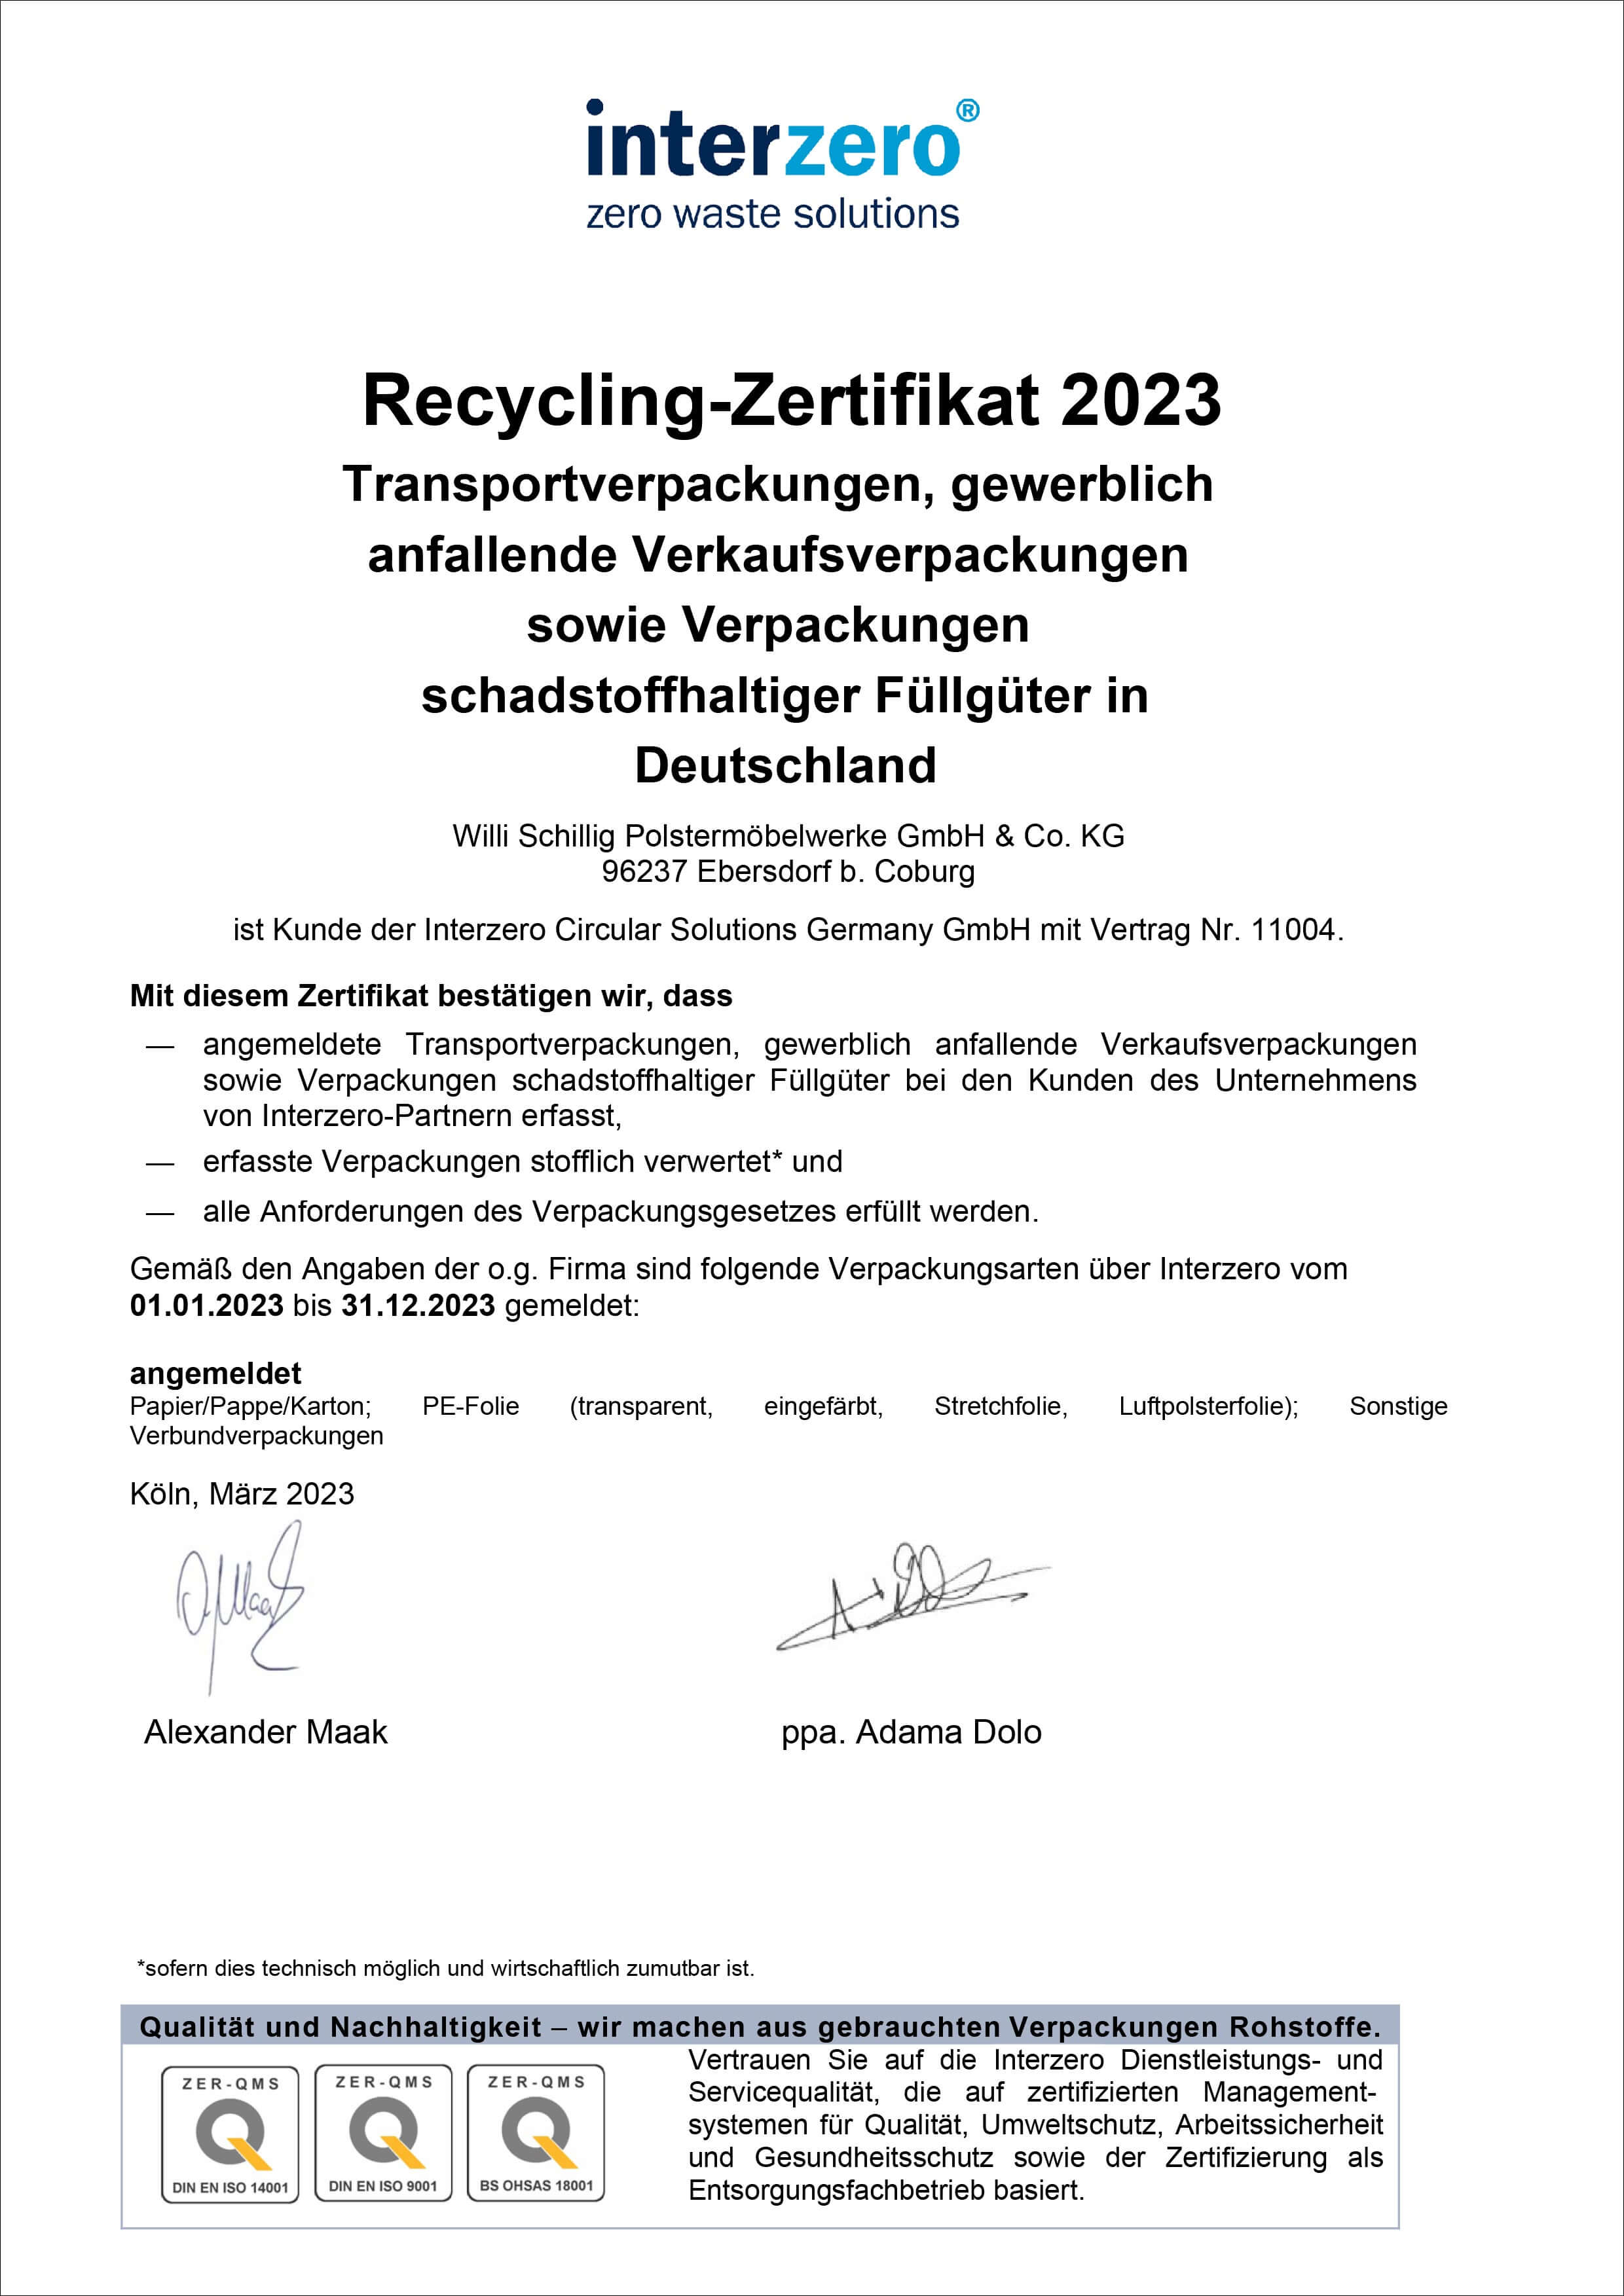 interzero - Recycling-Zertifikat 2023